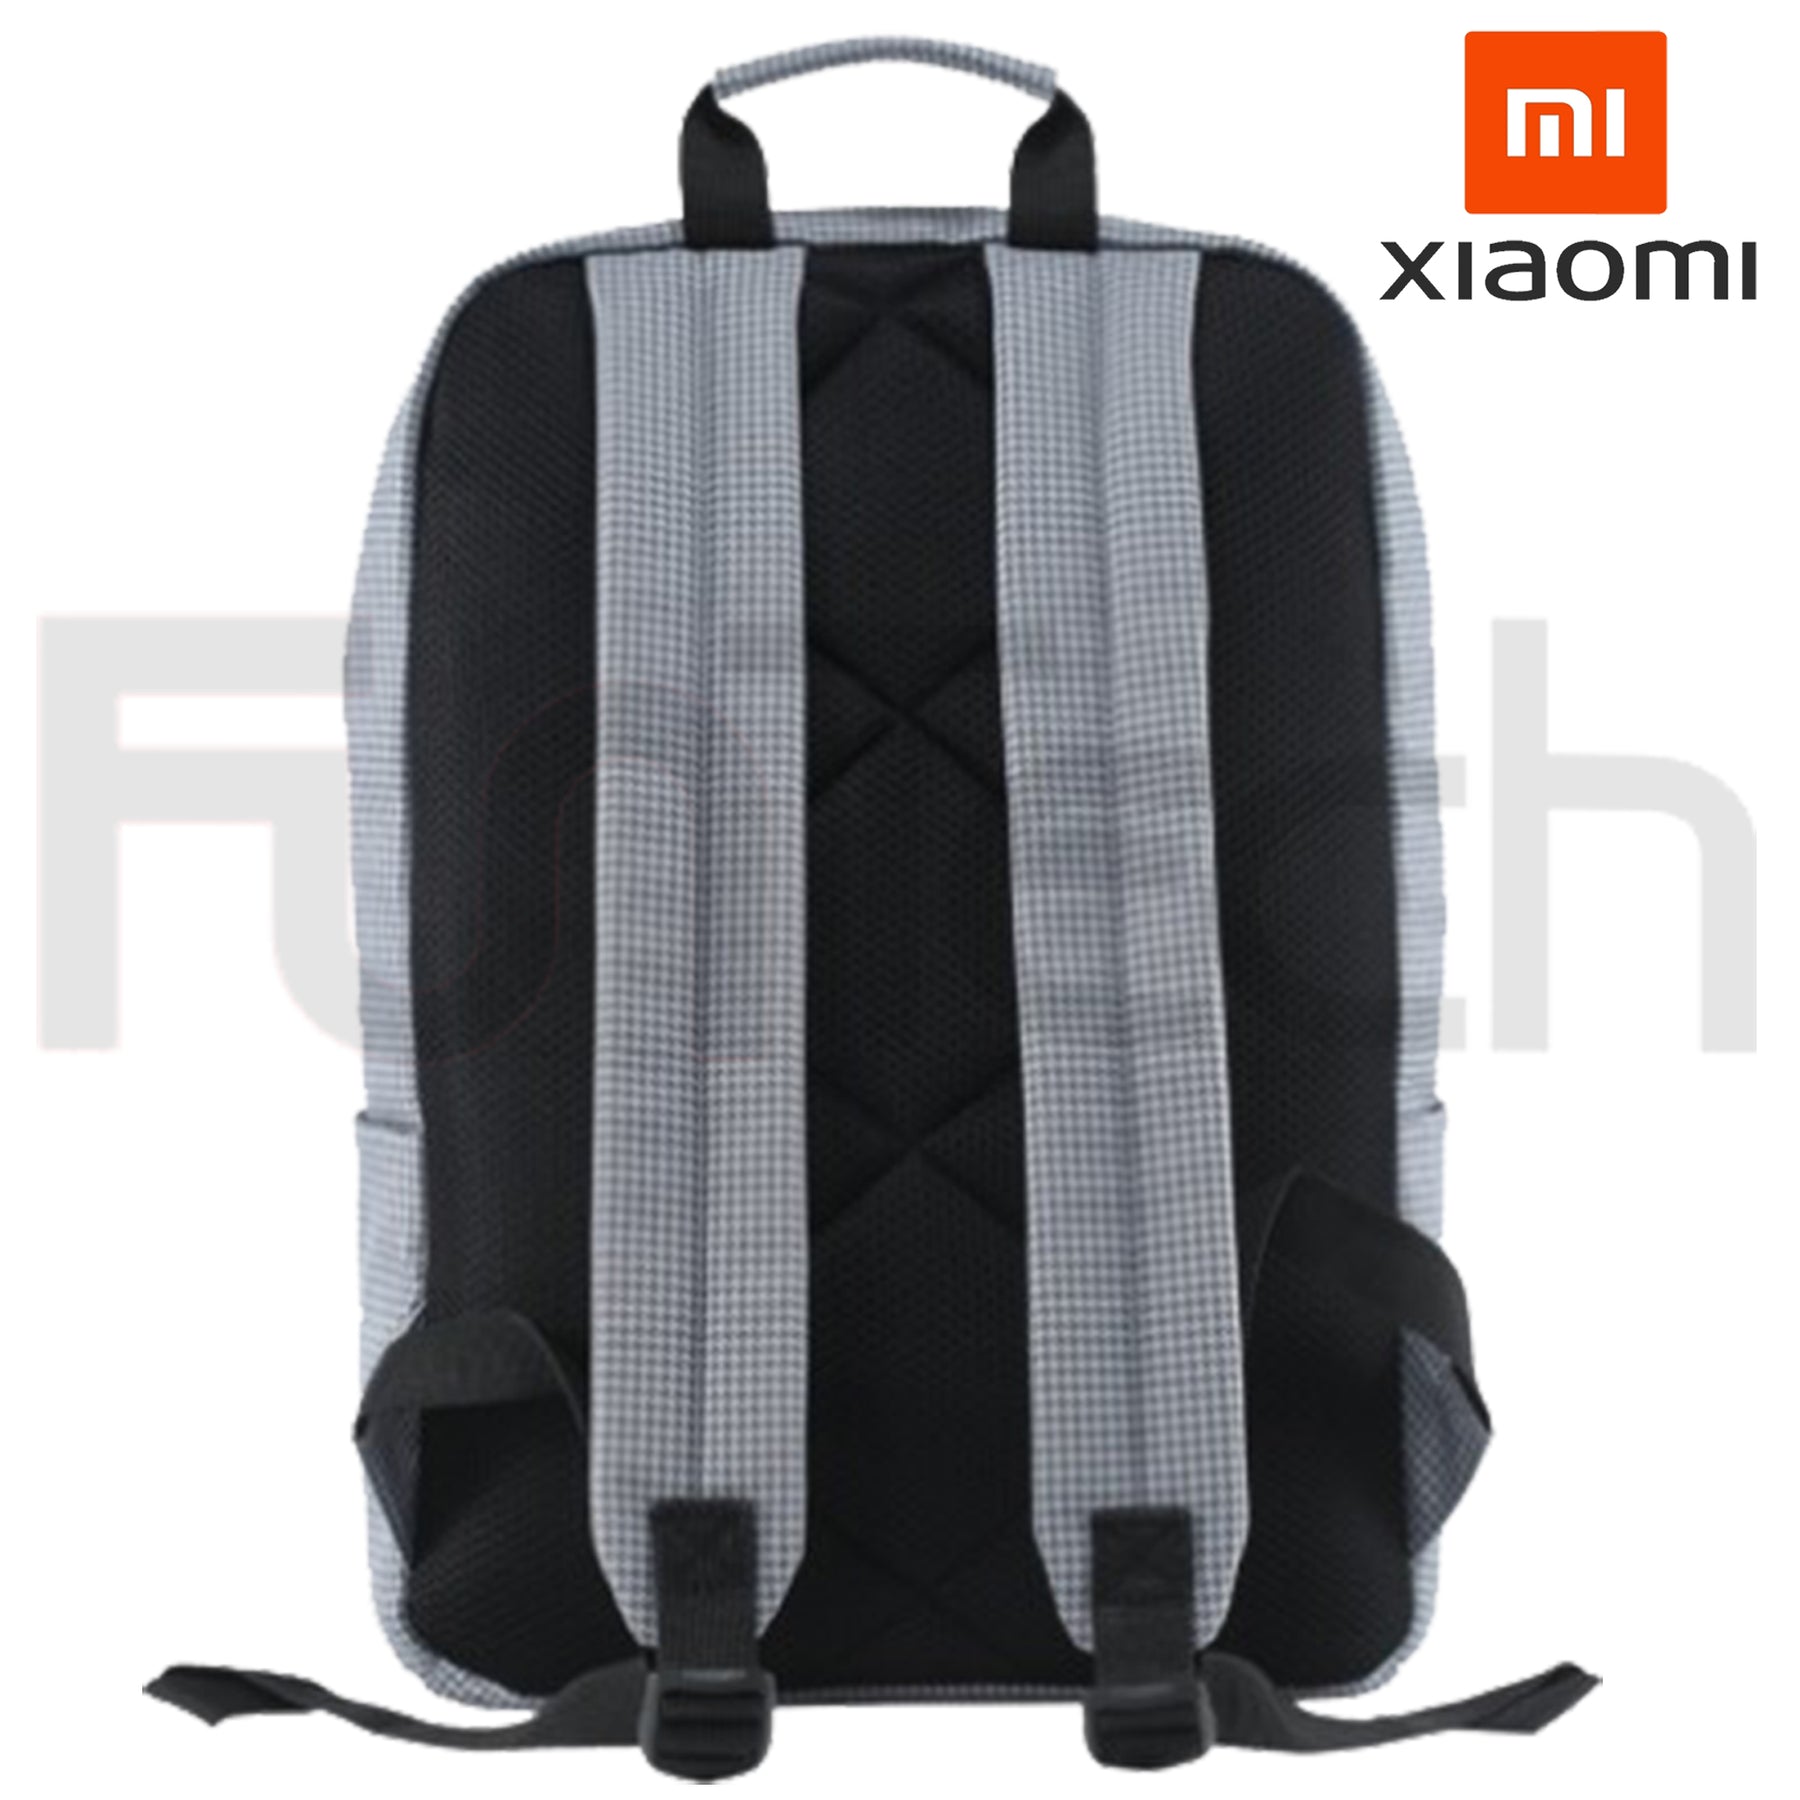 Xiaomi Mi Casual College Backpack Gray